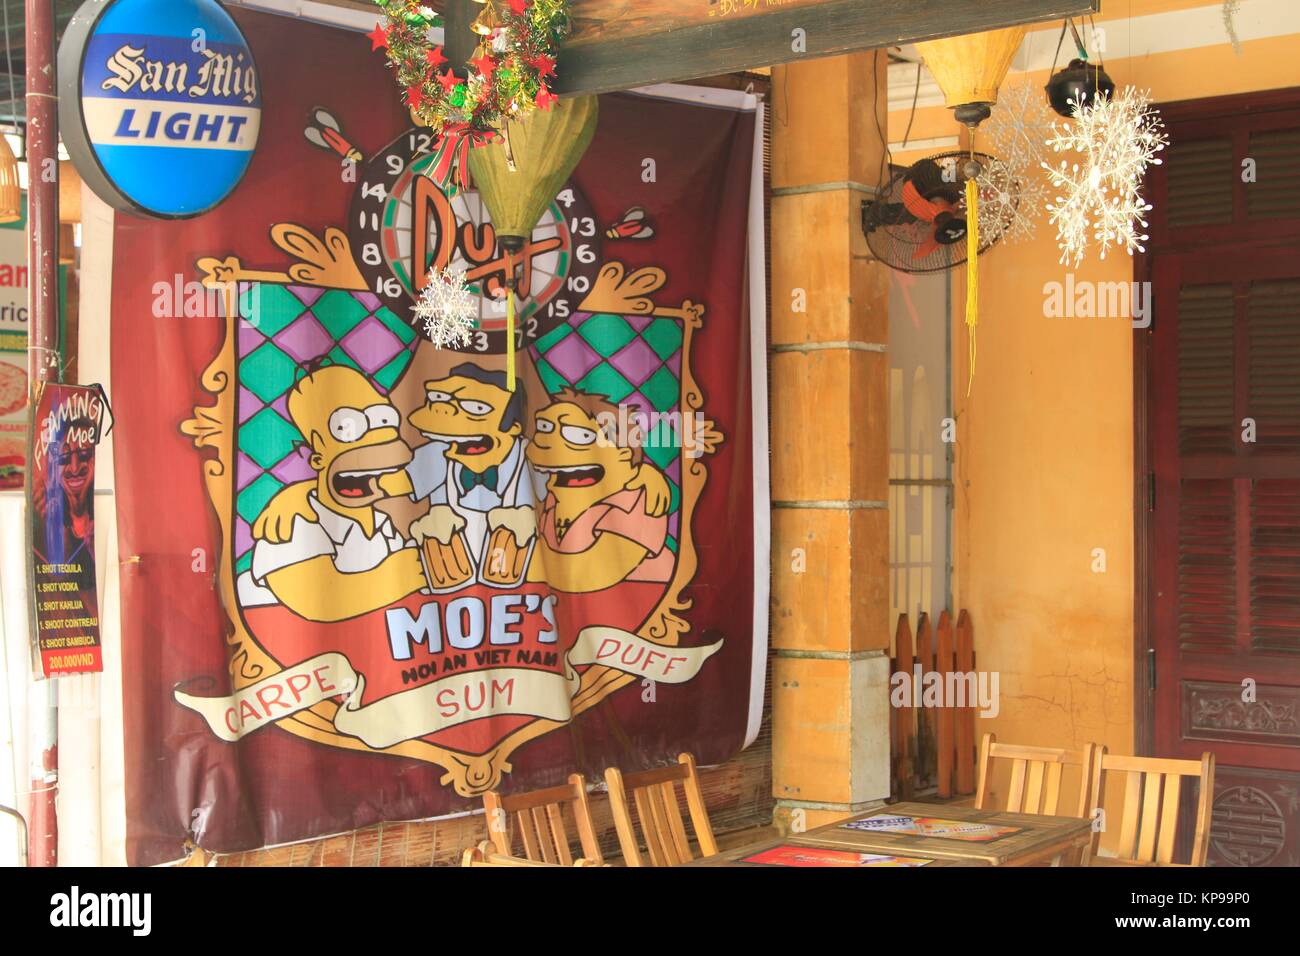 Moe's Bar in Hoi An, Vietnam Stock Photo - Alamy